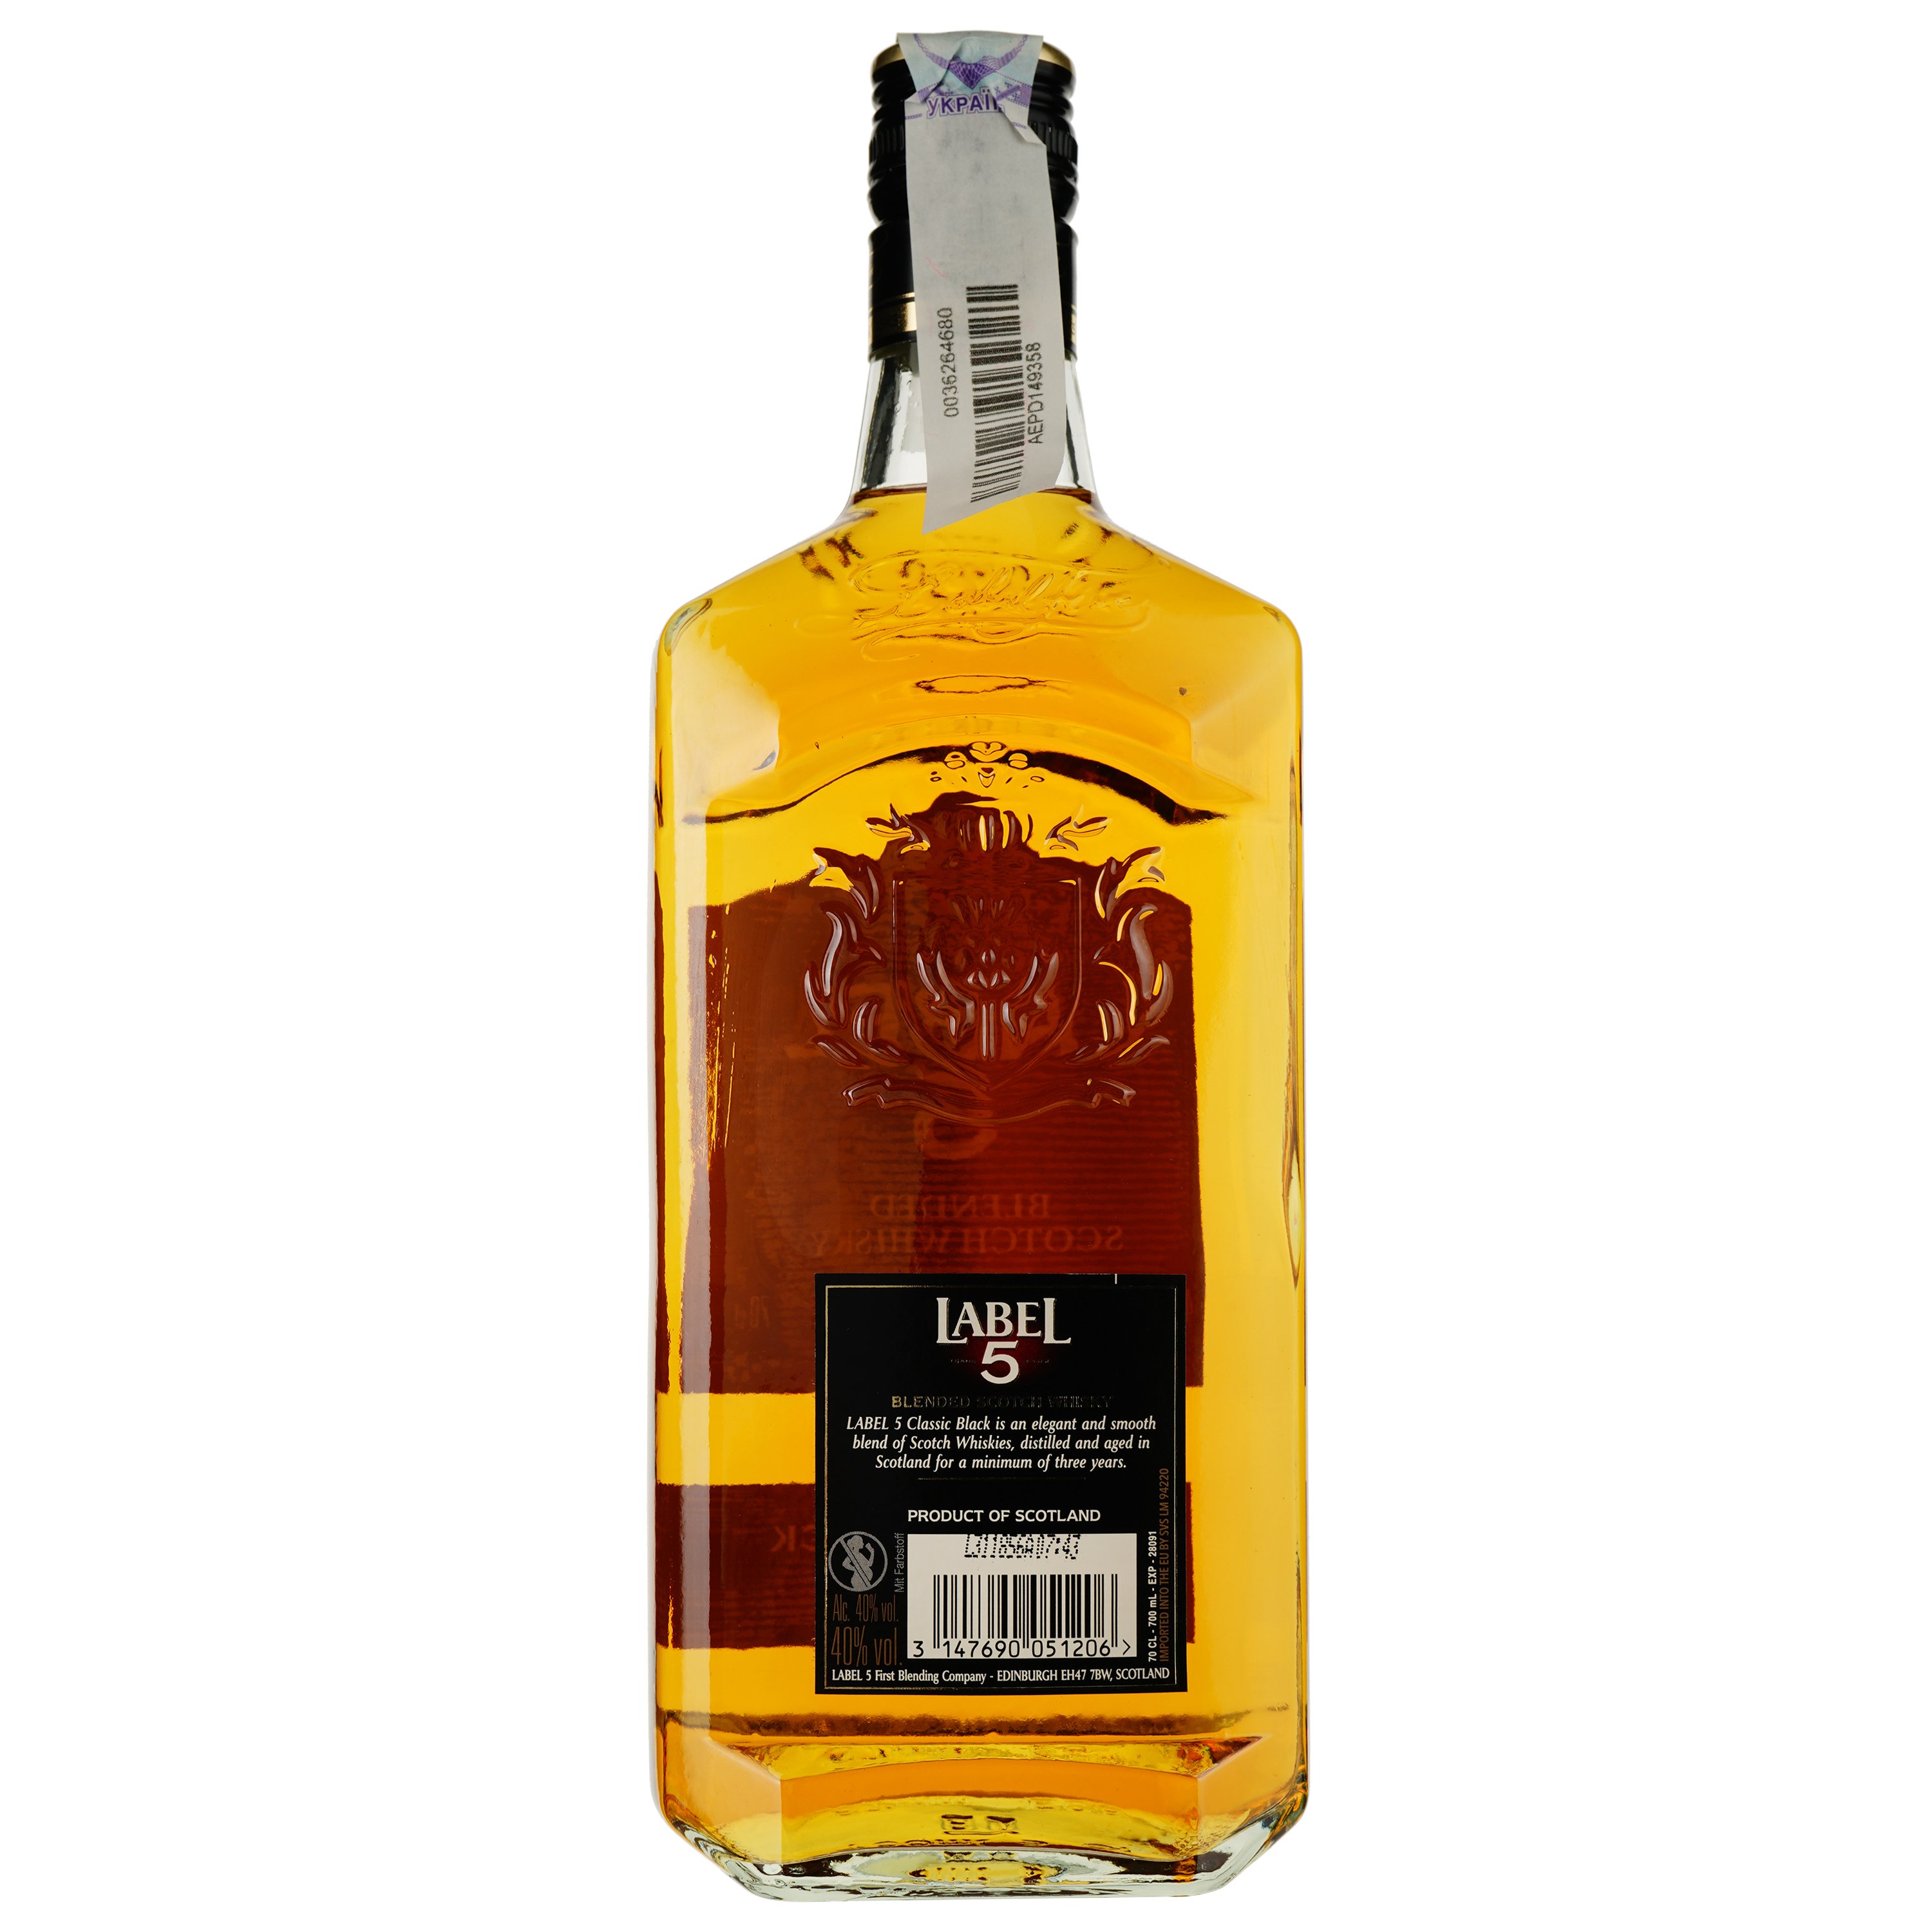 Віскі Label 5 Classic Black Blended Scotch Whisky 40% 0.7 л - фото 2